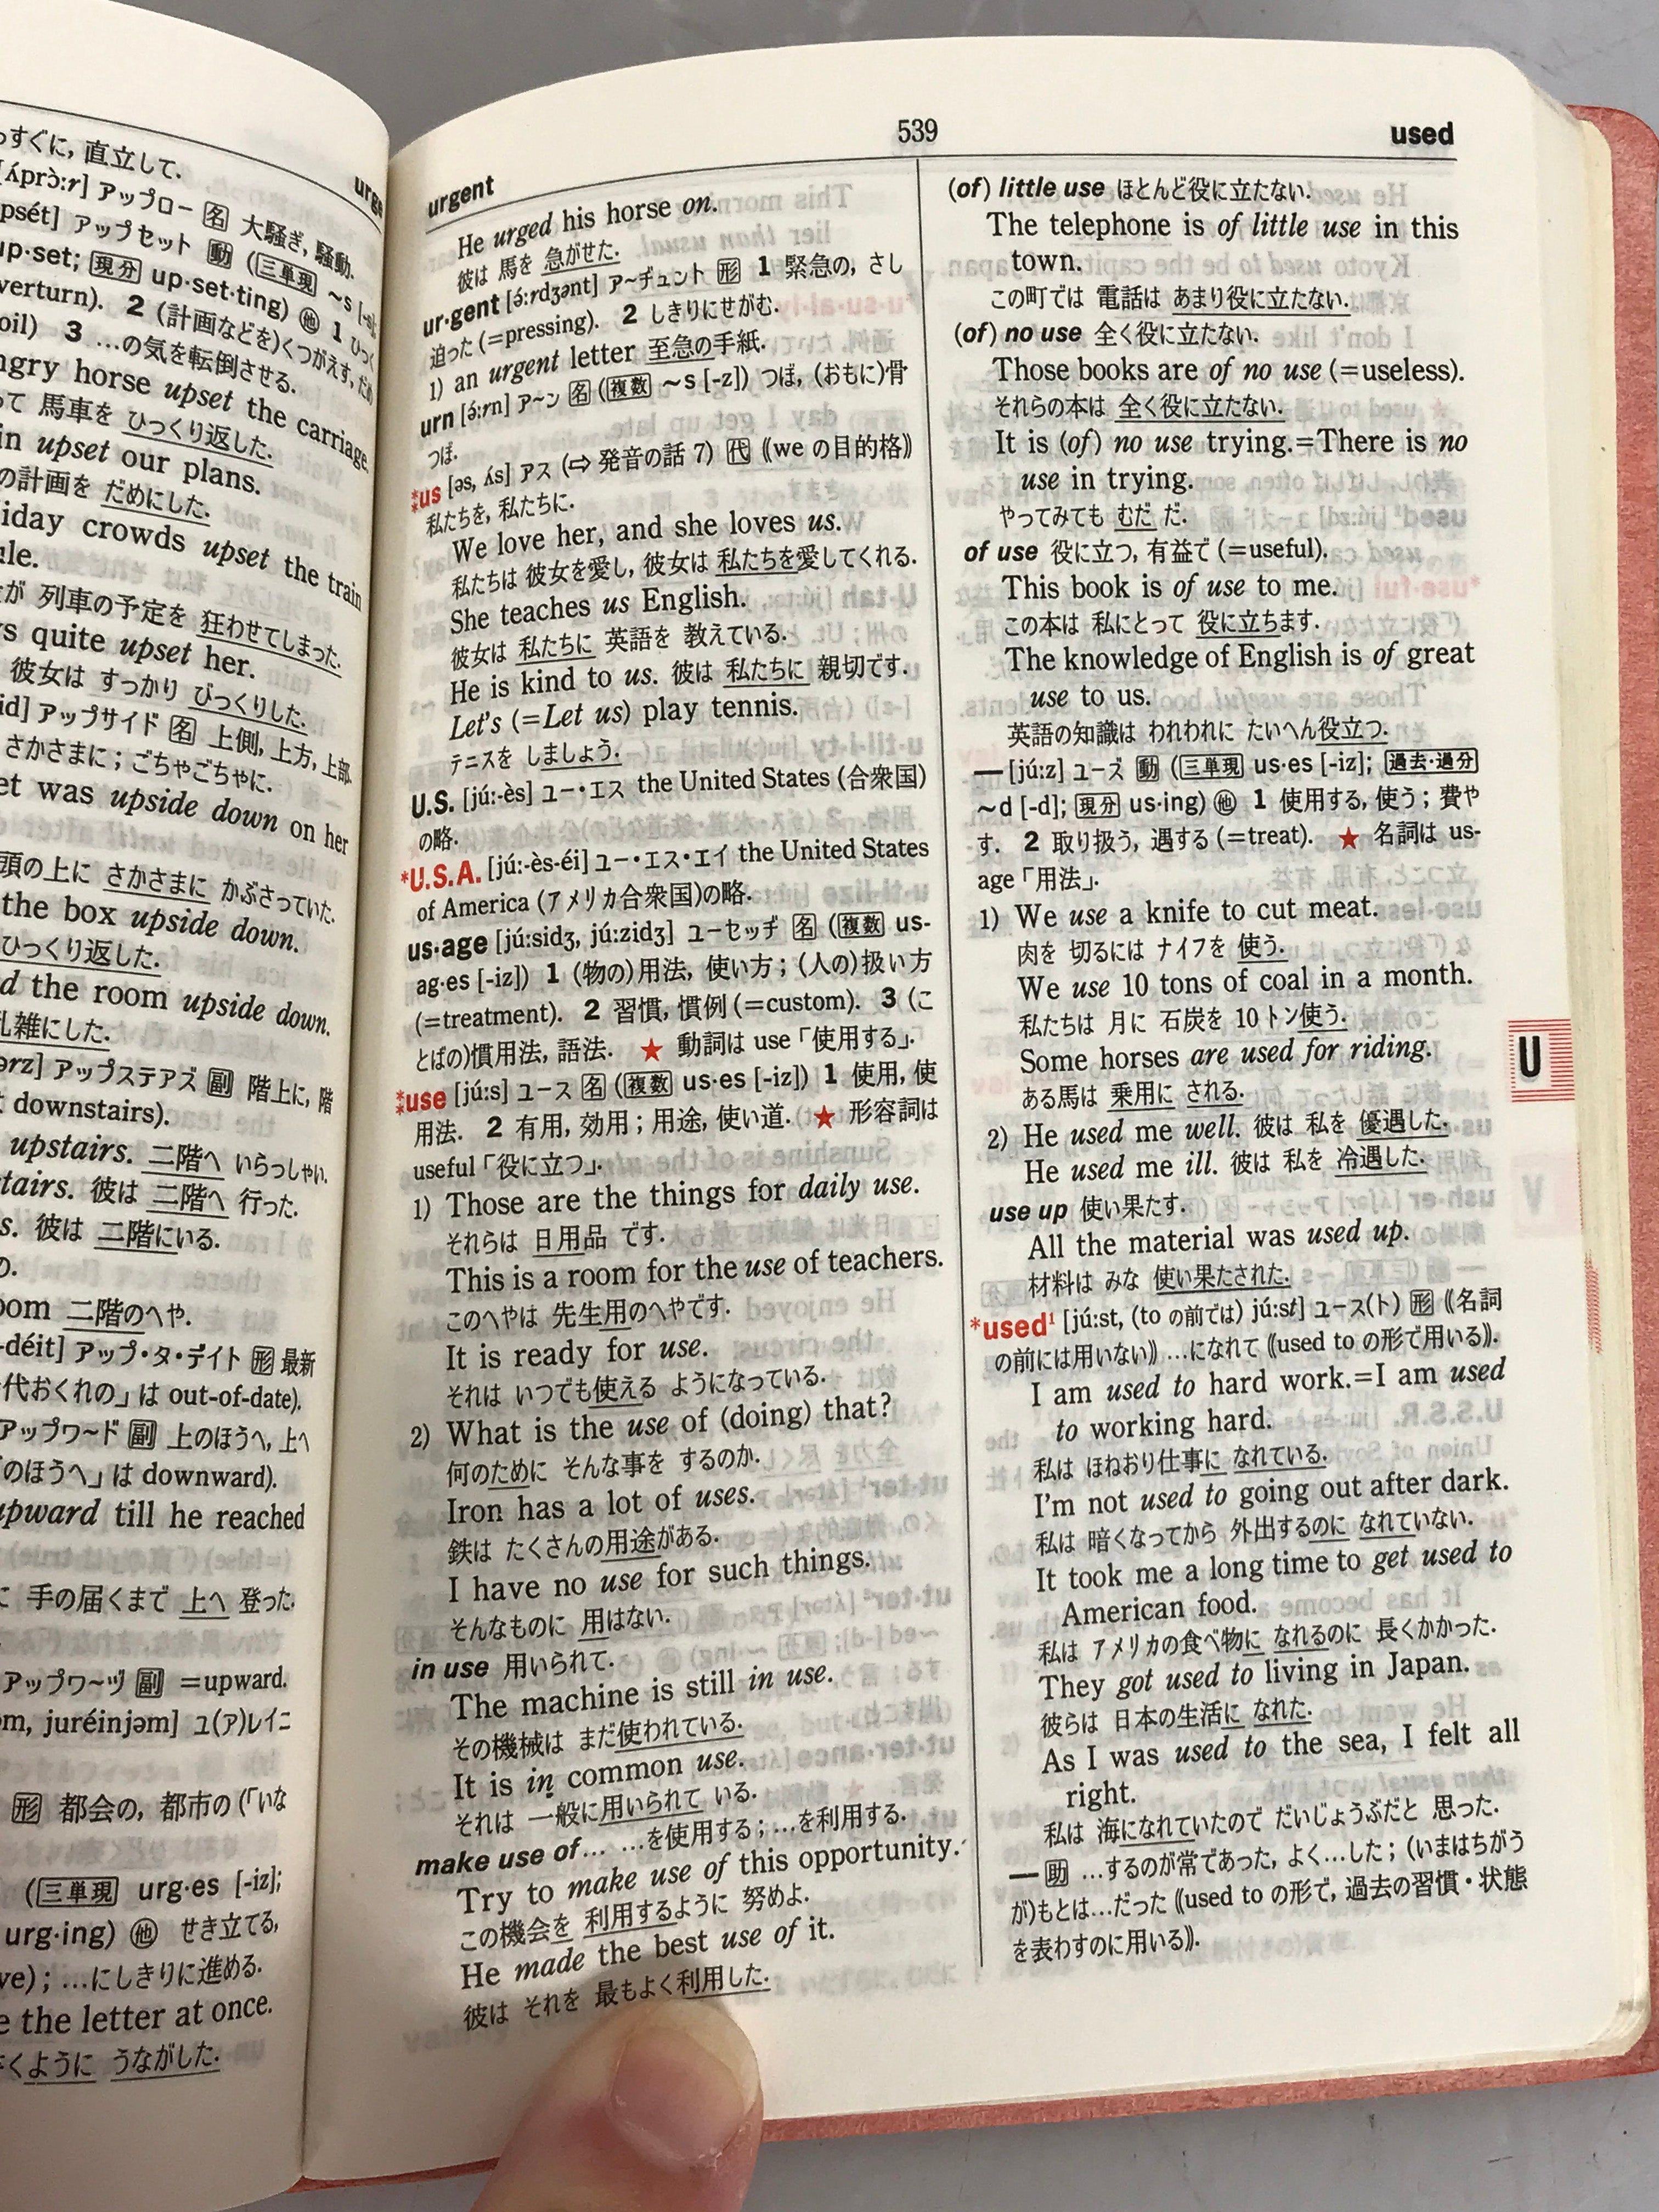 Kenkyusha's Apollo English-Japanese Dictionary 1969